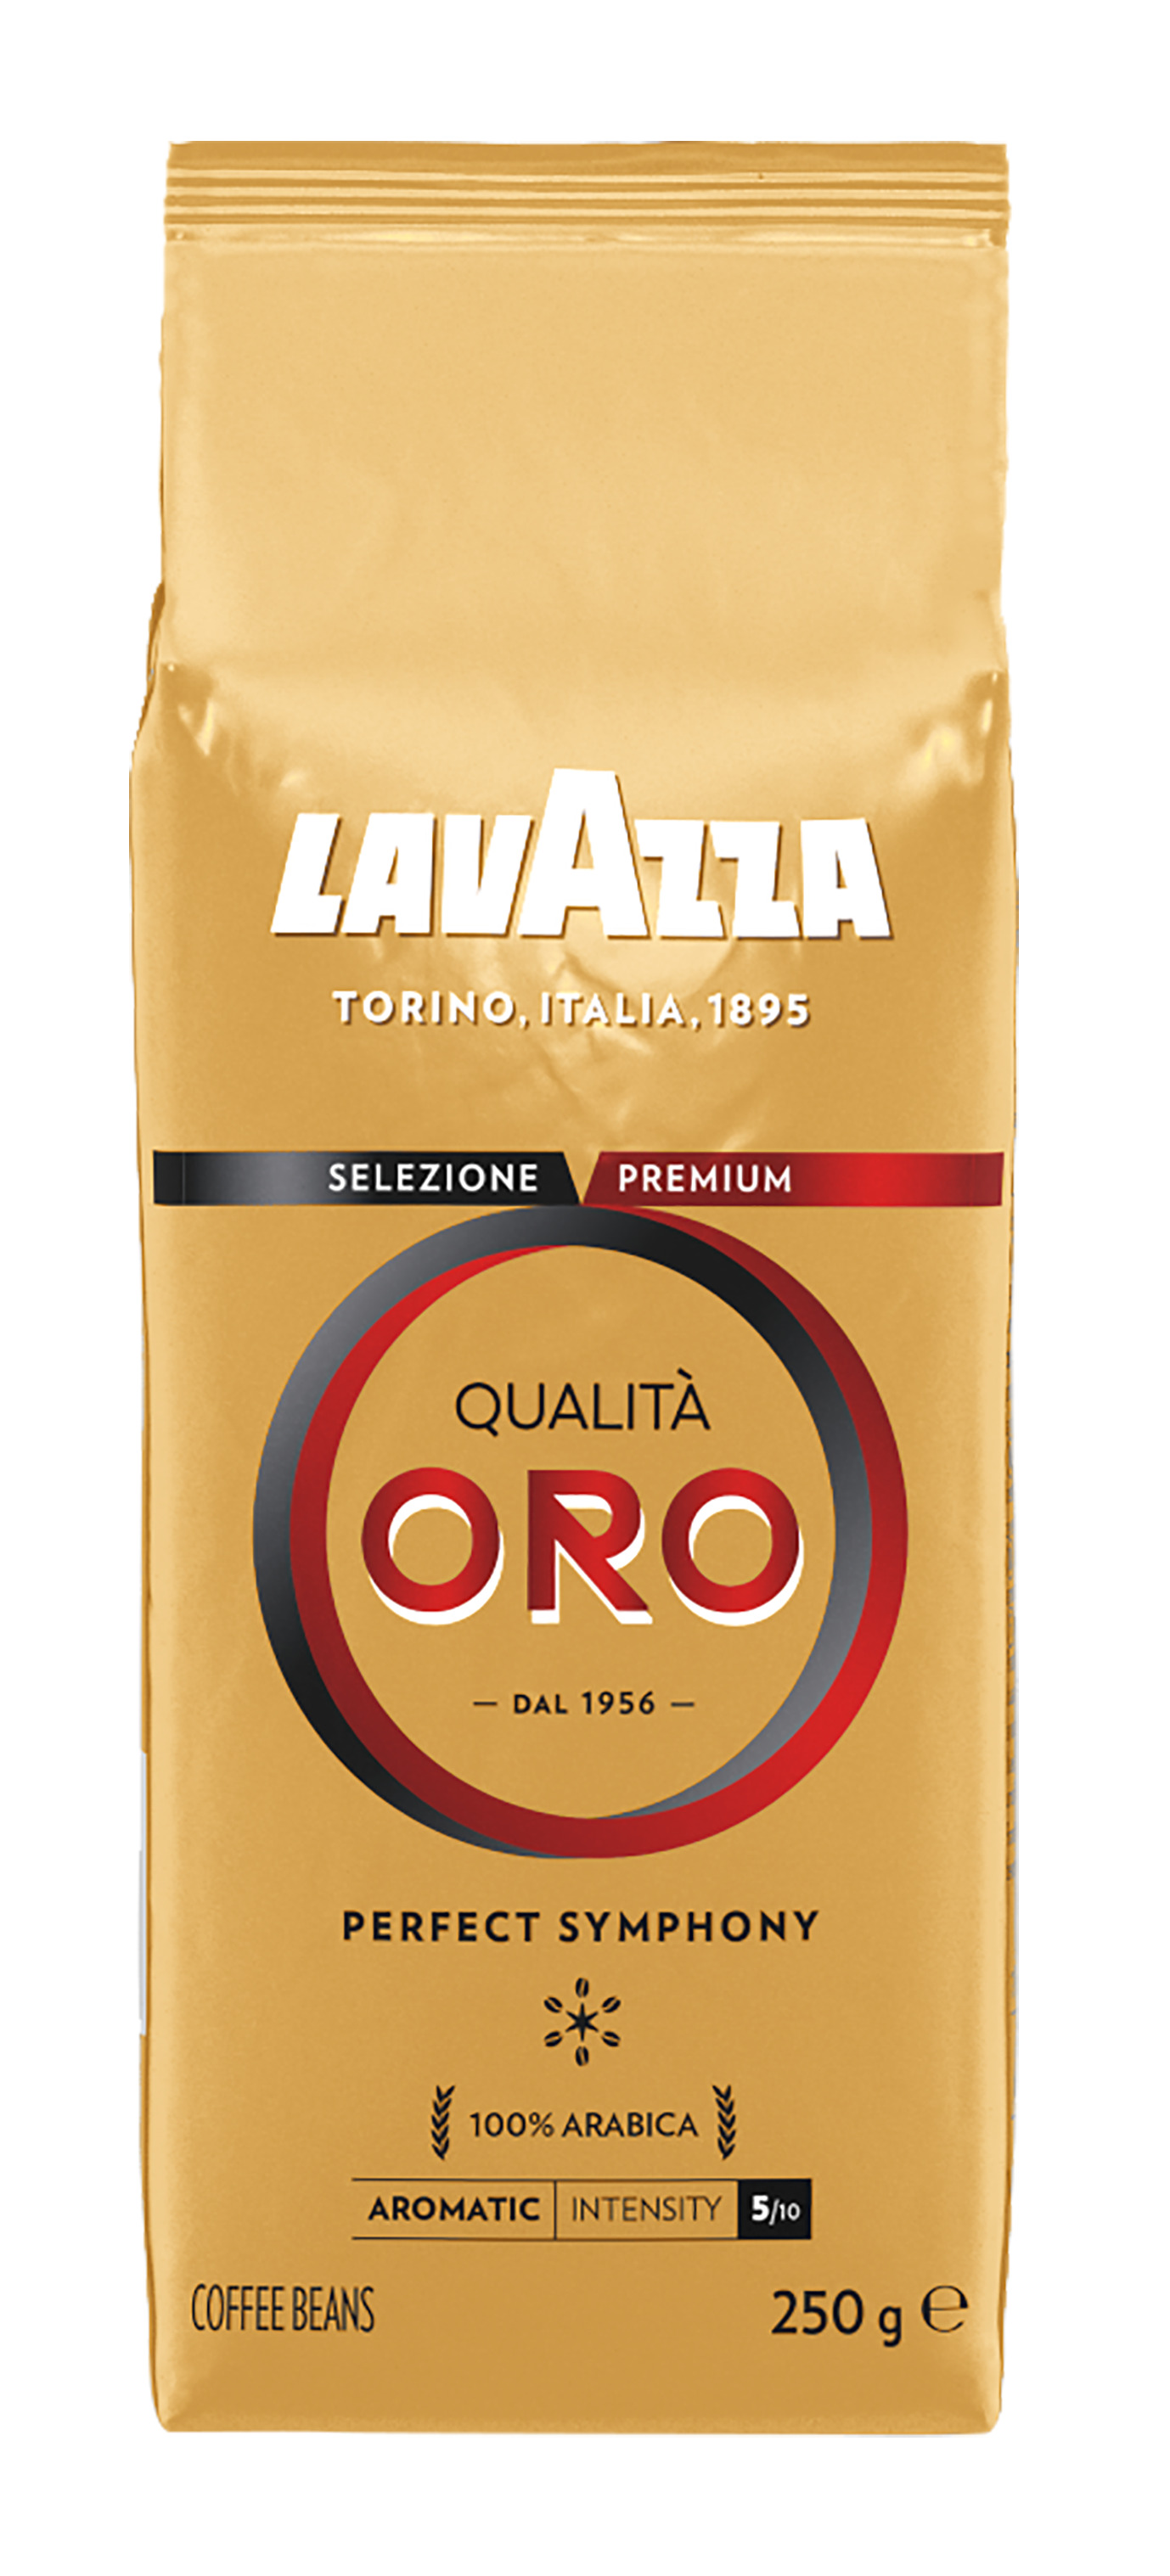 Купить lavazza qualita oro. Кофе в зернах Lavazza qualita Oro, Арабика, 1 кг. Lavazza qualita Oro perfect Symphony. Lavazza qualita Oro упаковка. Кофе Лавацца Оро.